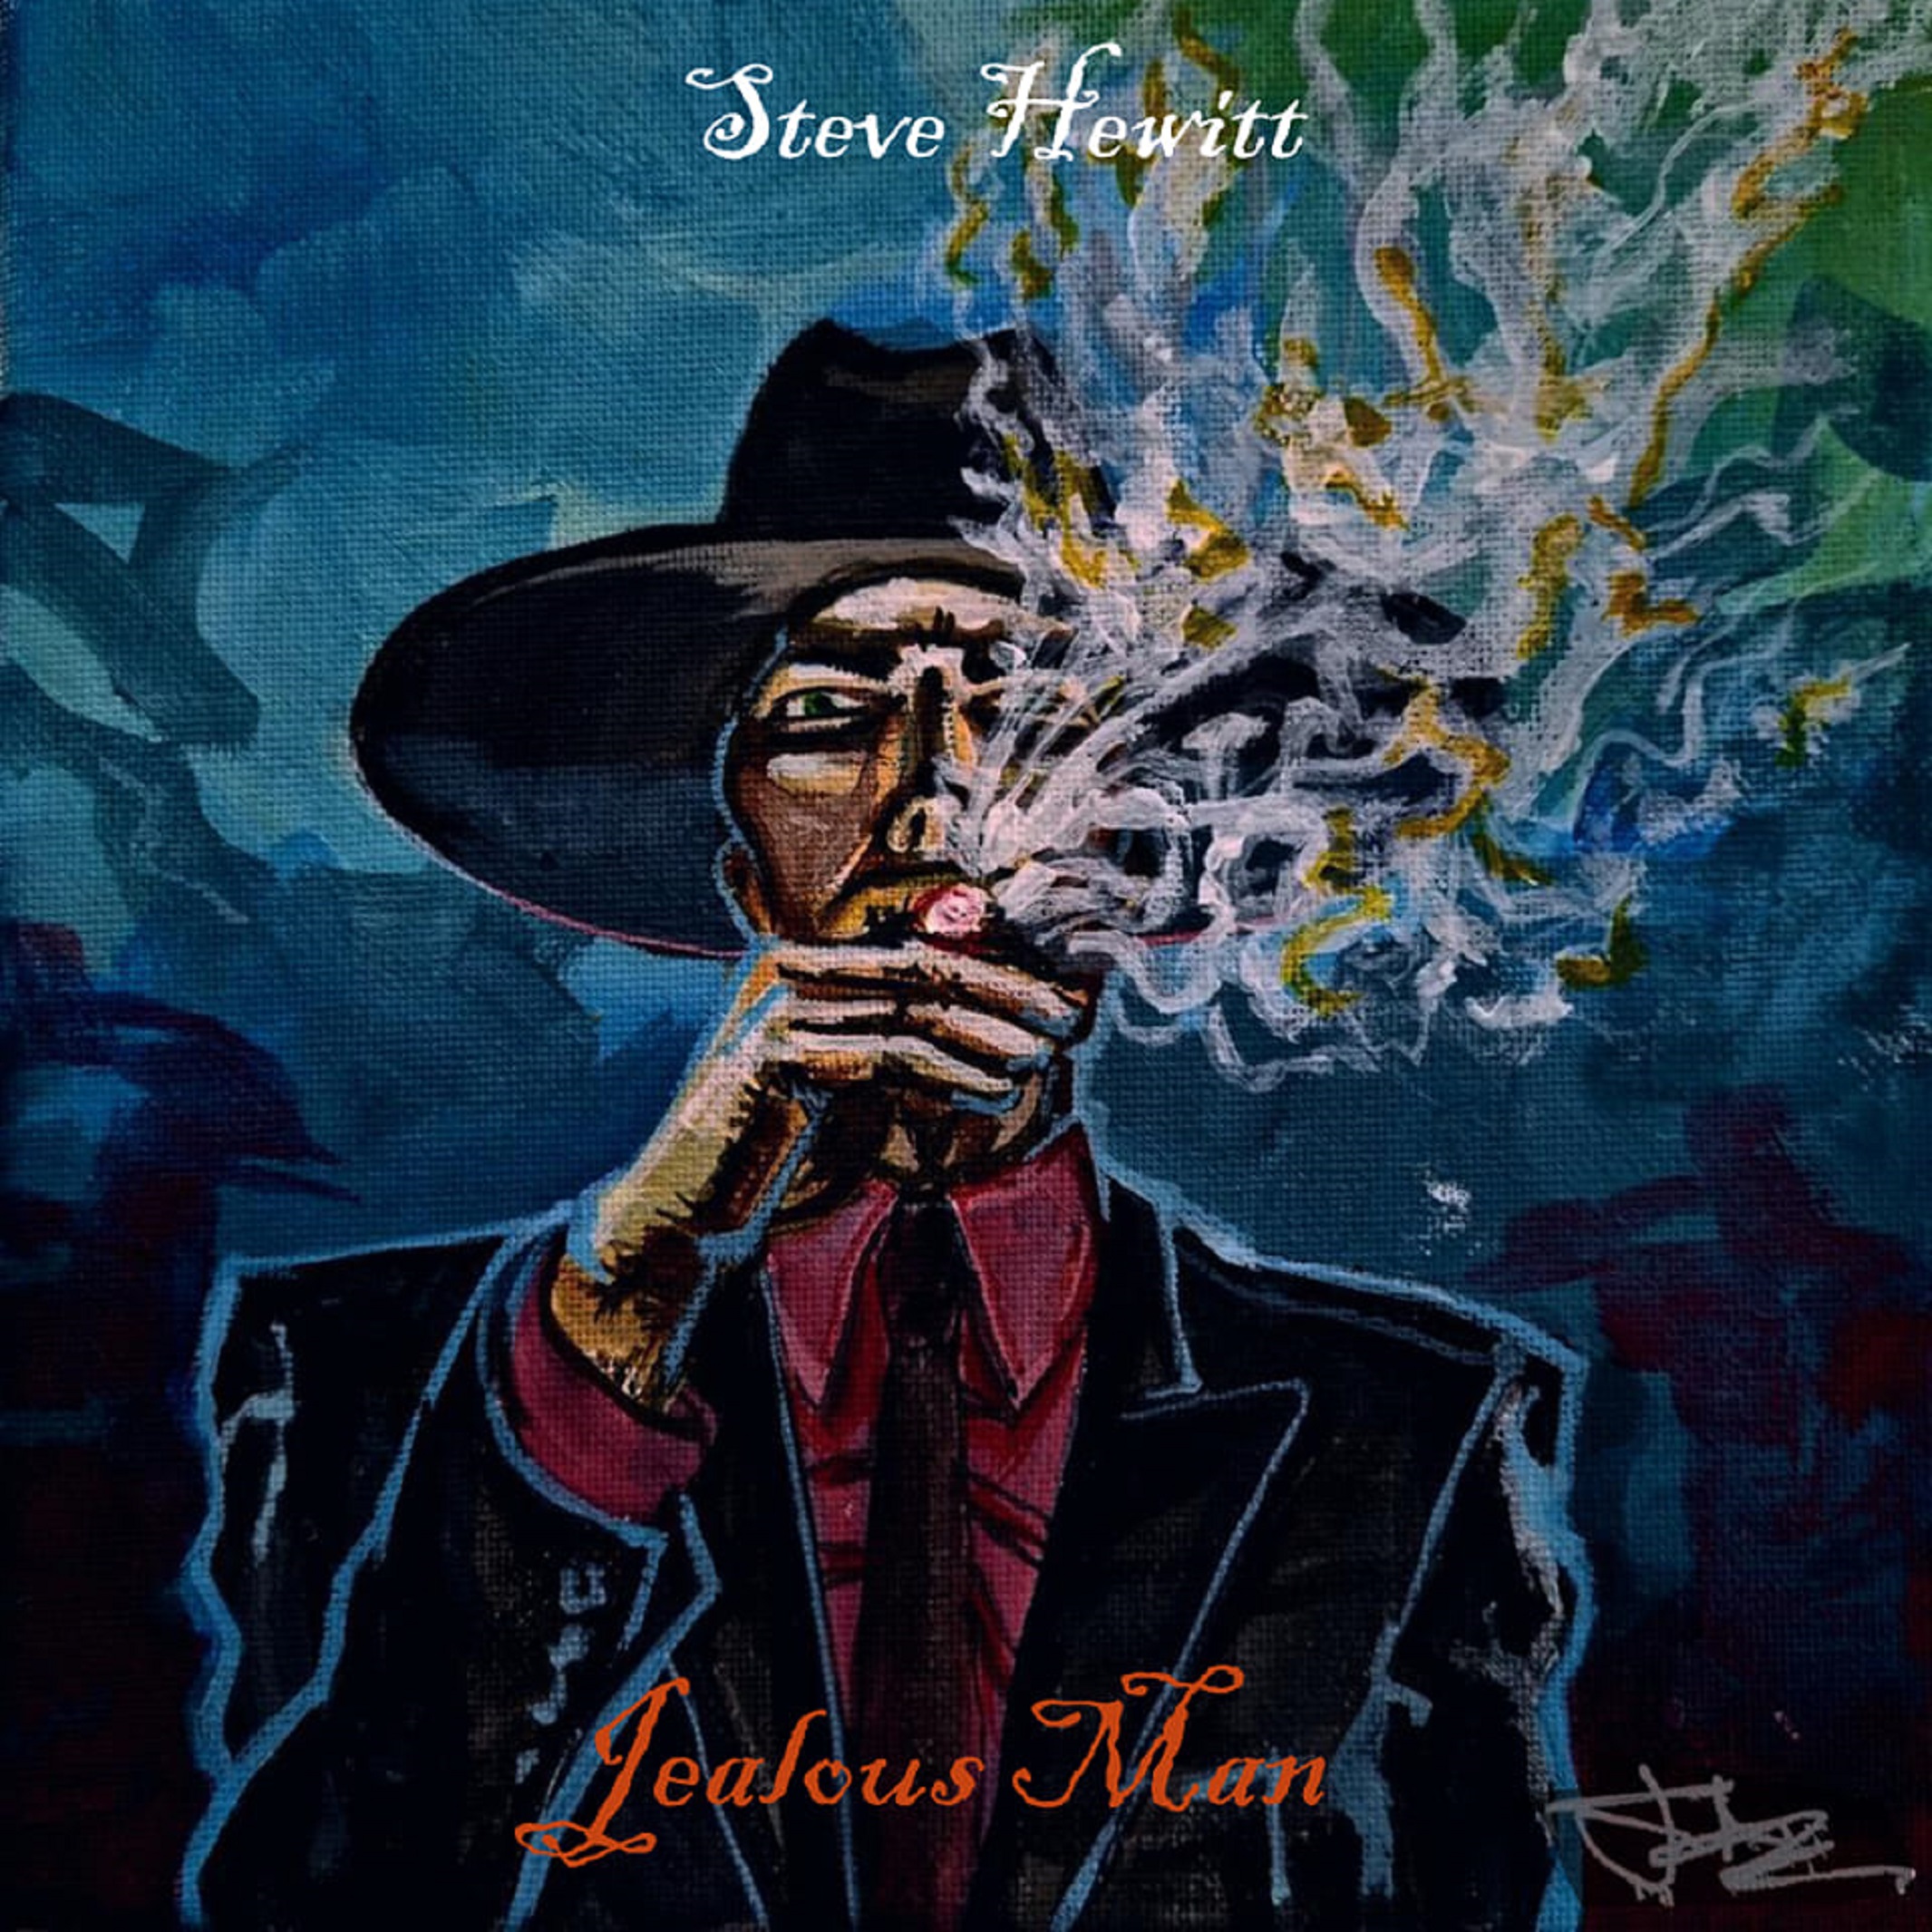 Steve Hewitt shares new video/single "Jealous Man"